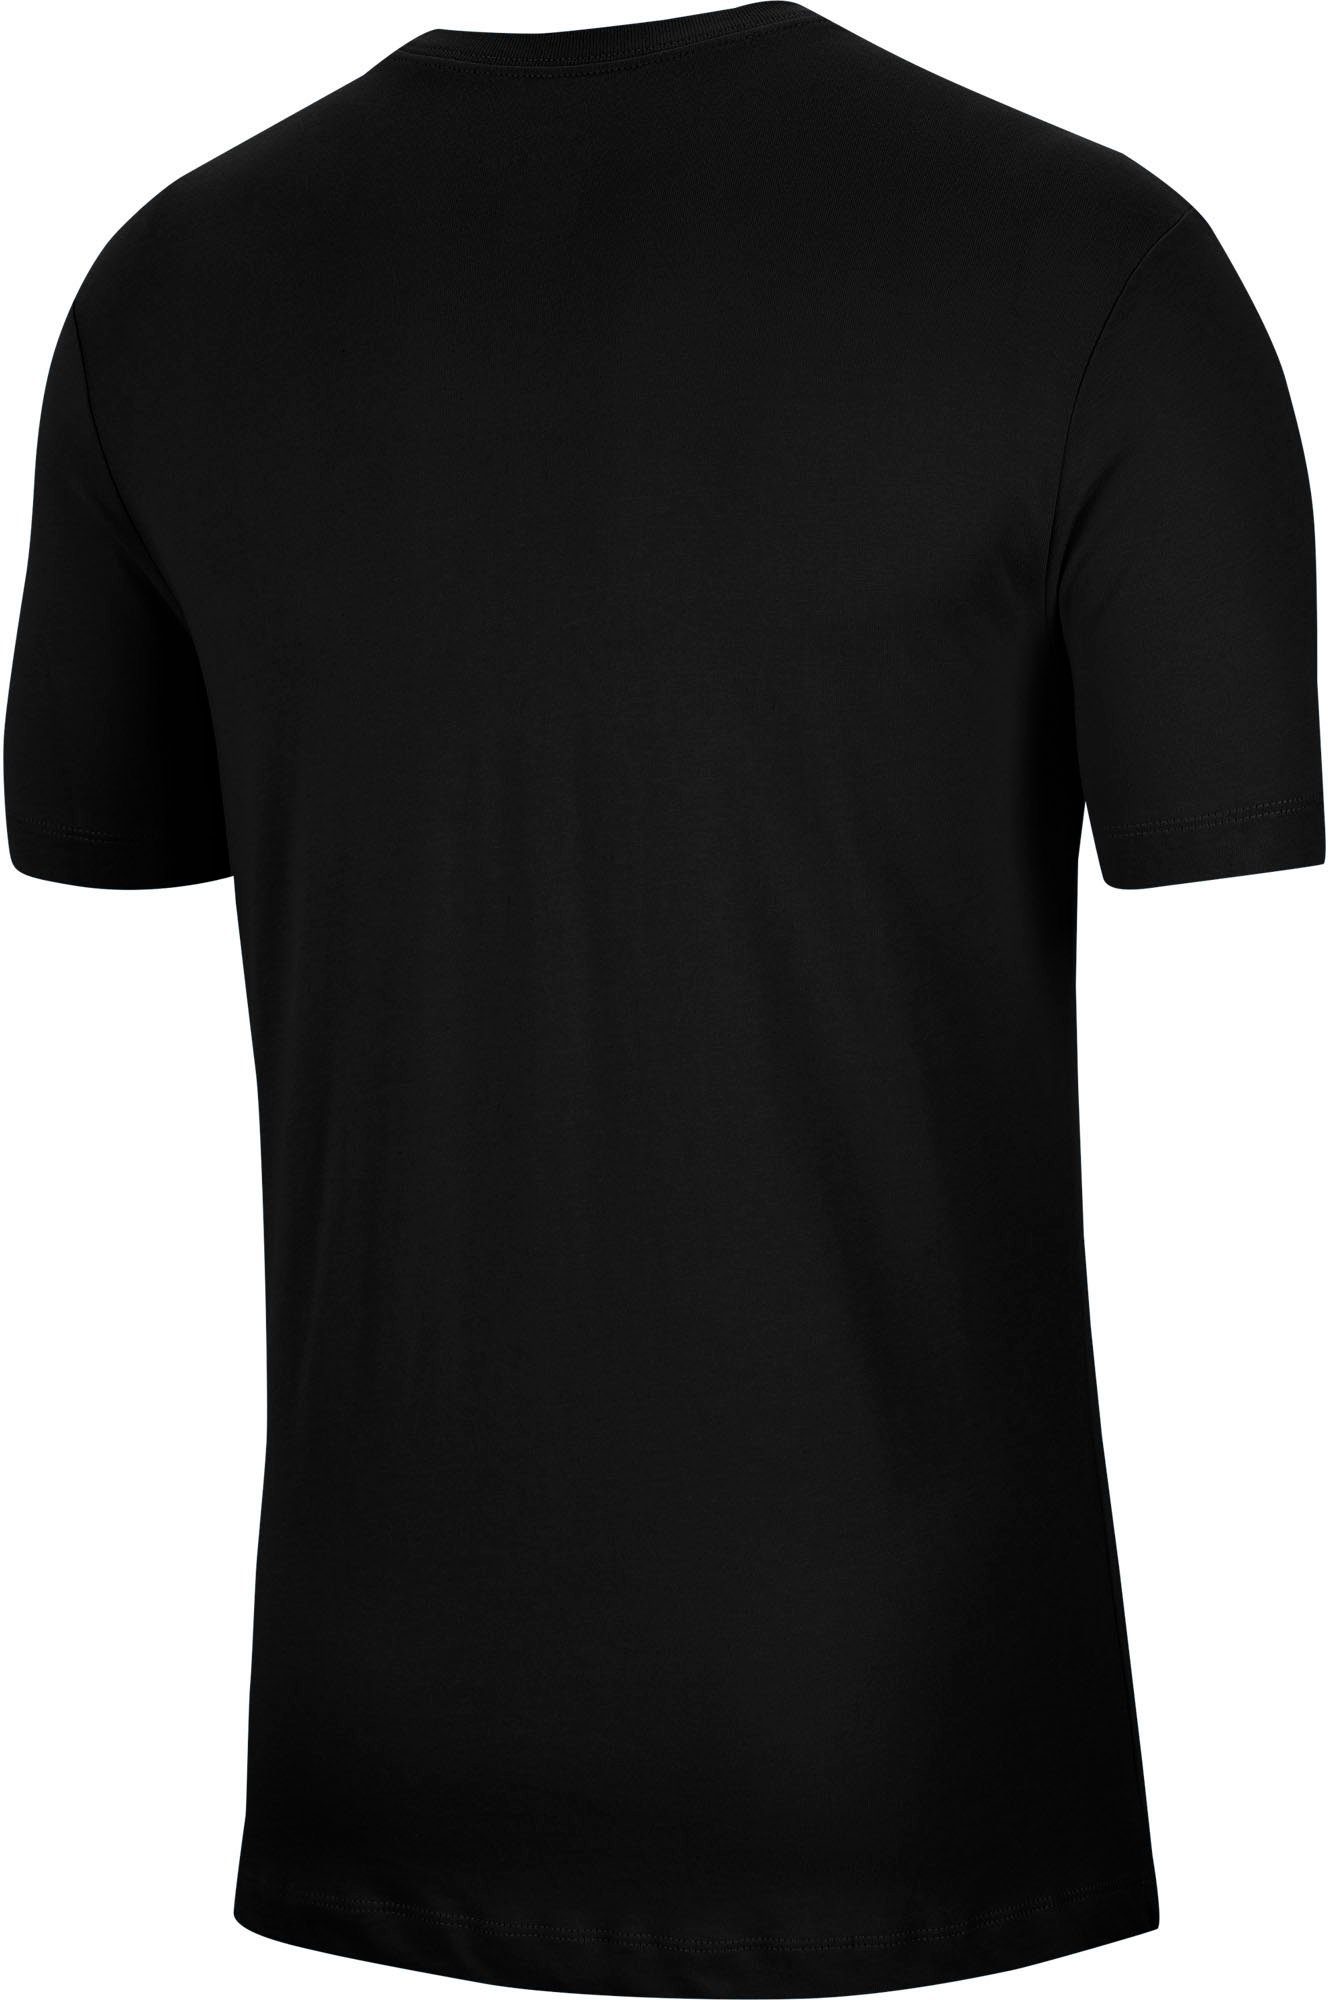 Laufshirt schwarz Nike Men's Running Dri-FIT T-Shirt